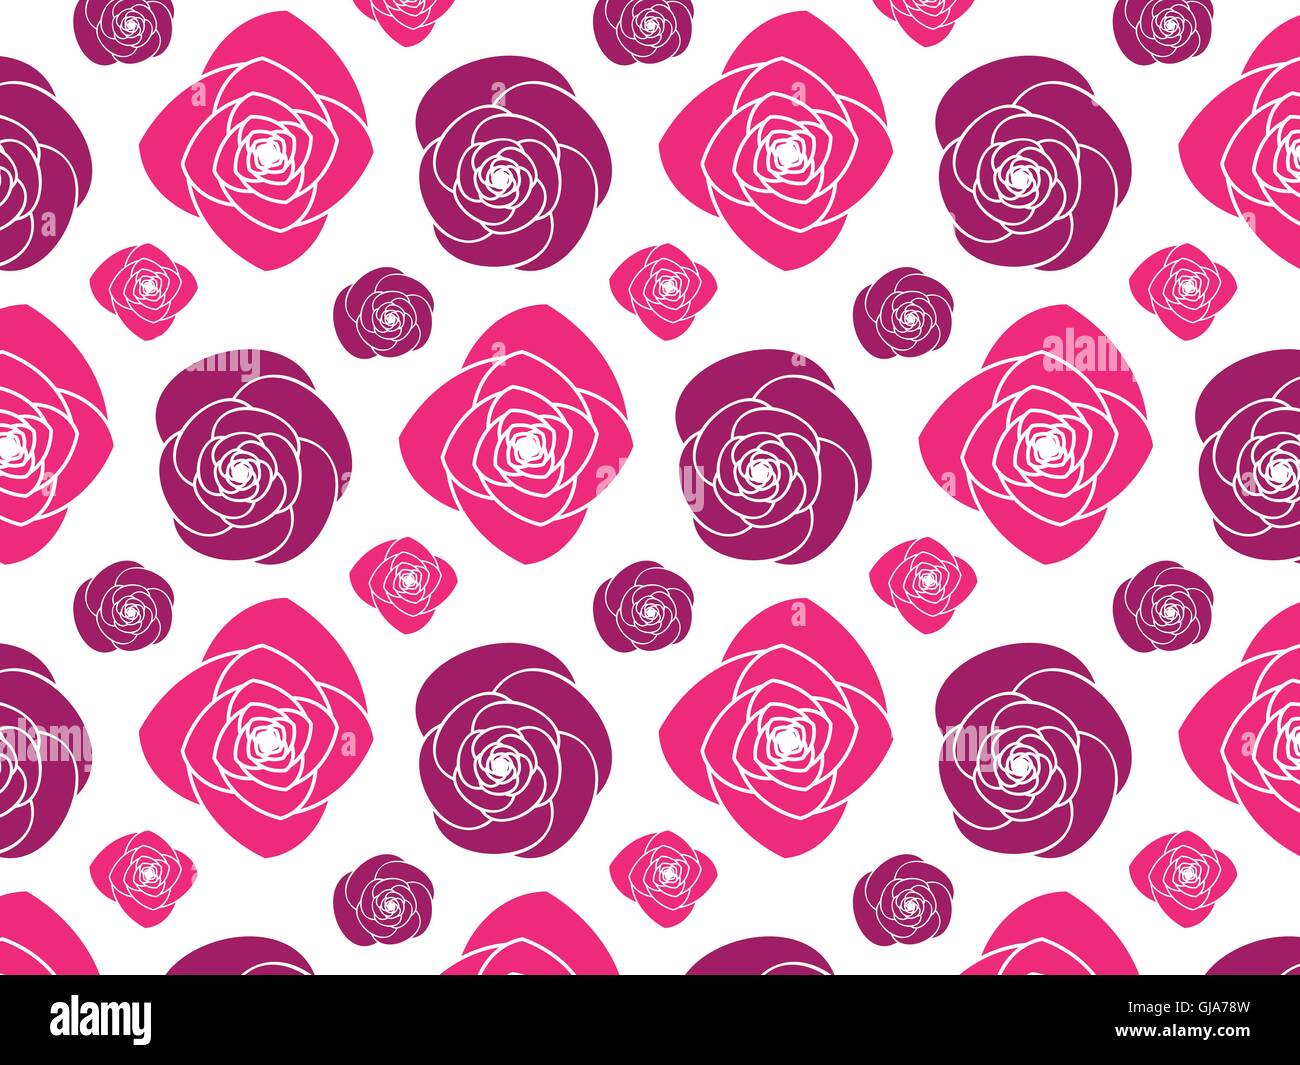 Skalierbare rosa Pfingstrose Blumenmuster Stock Vektor